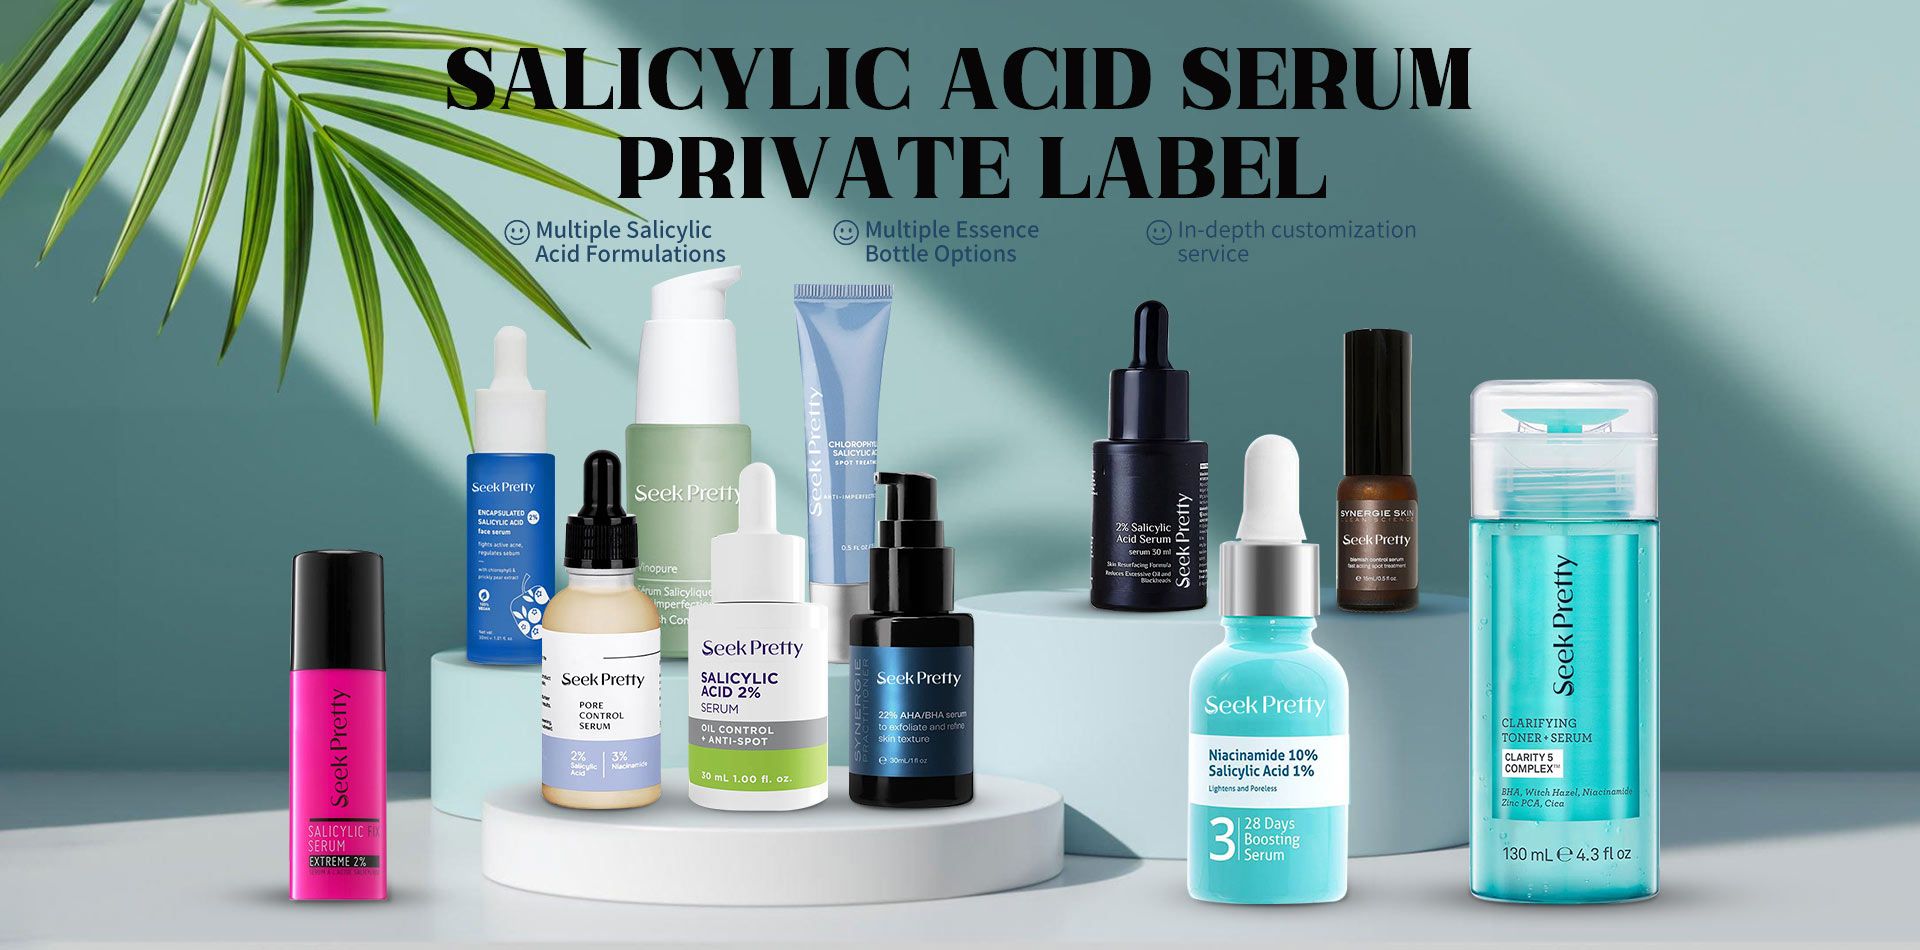 Star Salicylic Acid Serum, Salicylic Acid Serum Private Label, Salicylic Acid Serum Manufacturer, Salicylic Acid Serum OEM